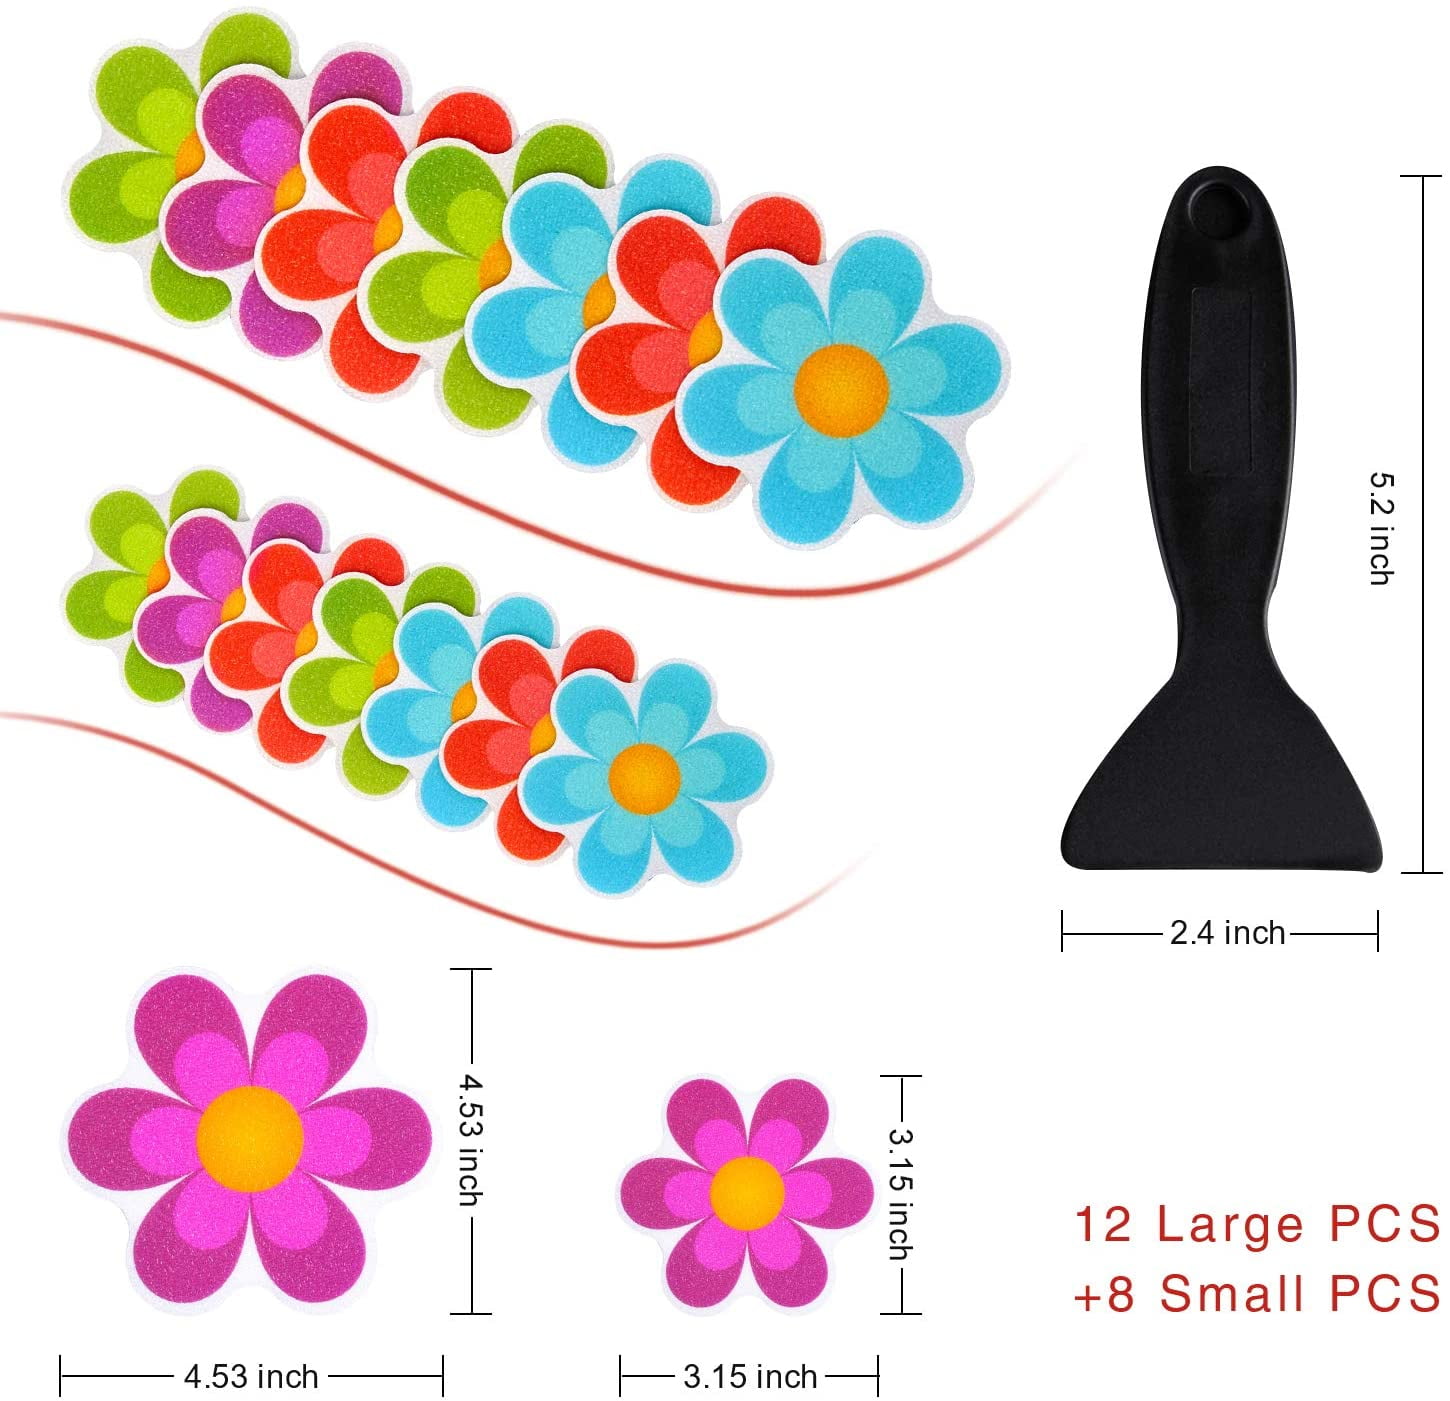 20Pcs Flower Safety Treads Non-Slip Applique Stickers Pads Bath Tub&Shower Decal 